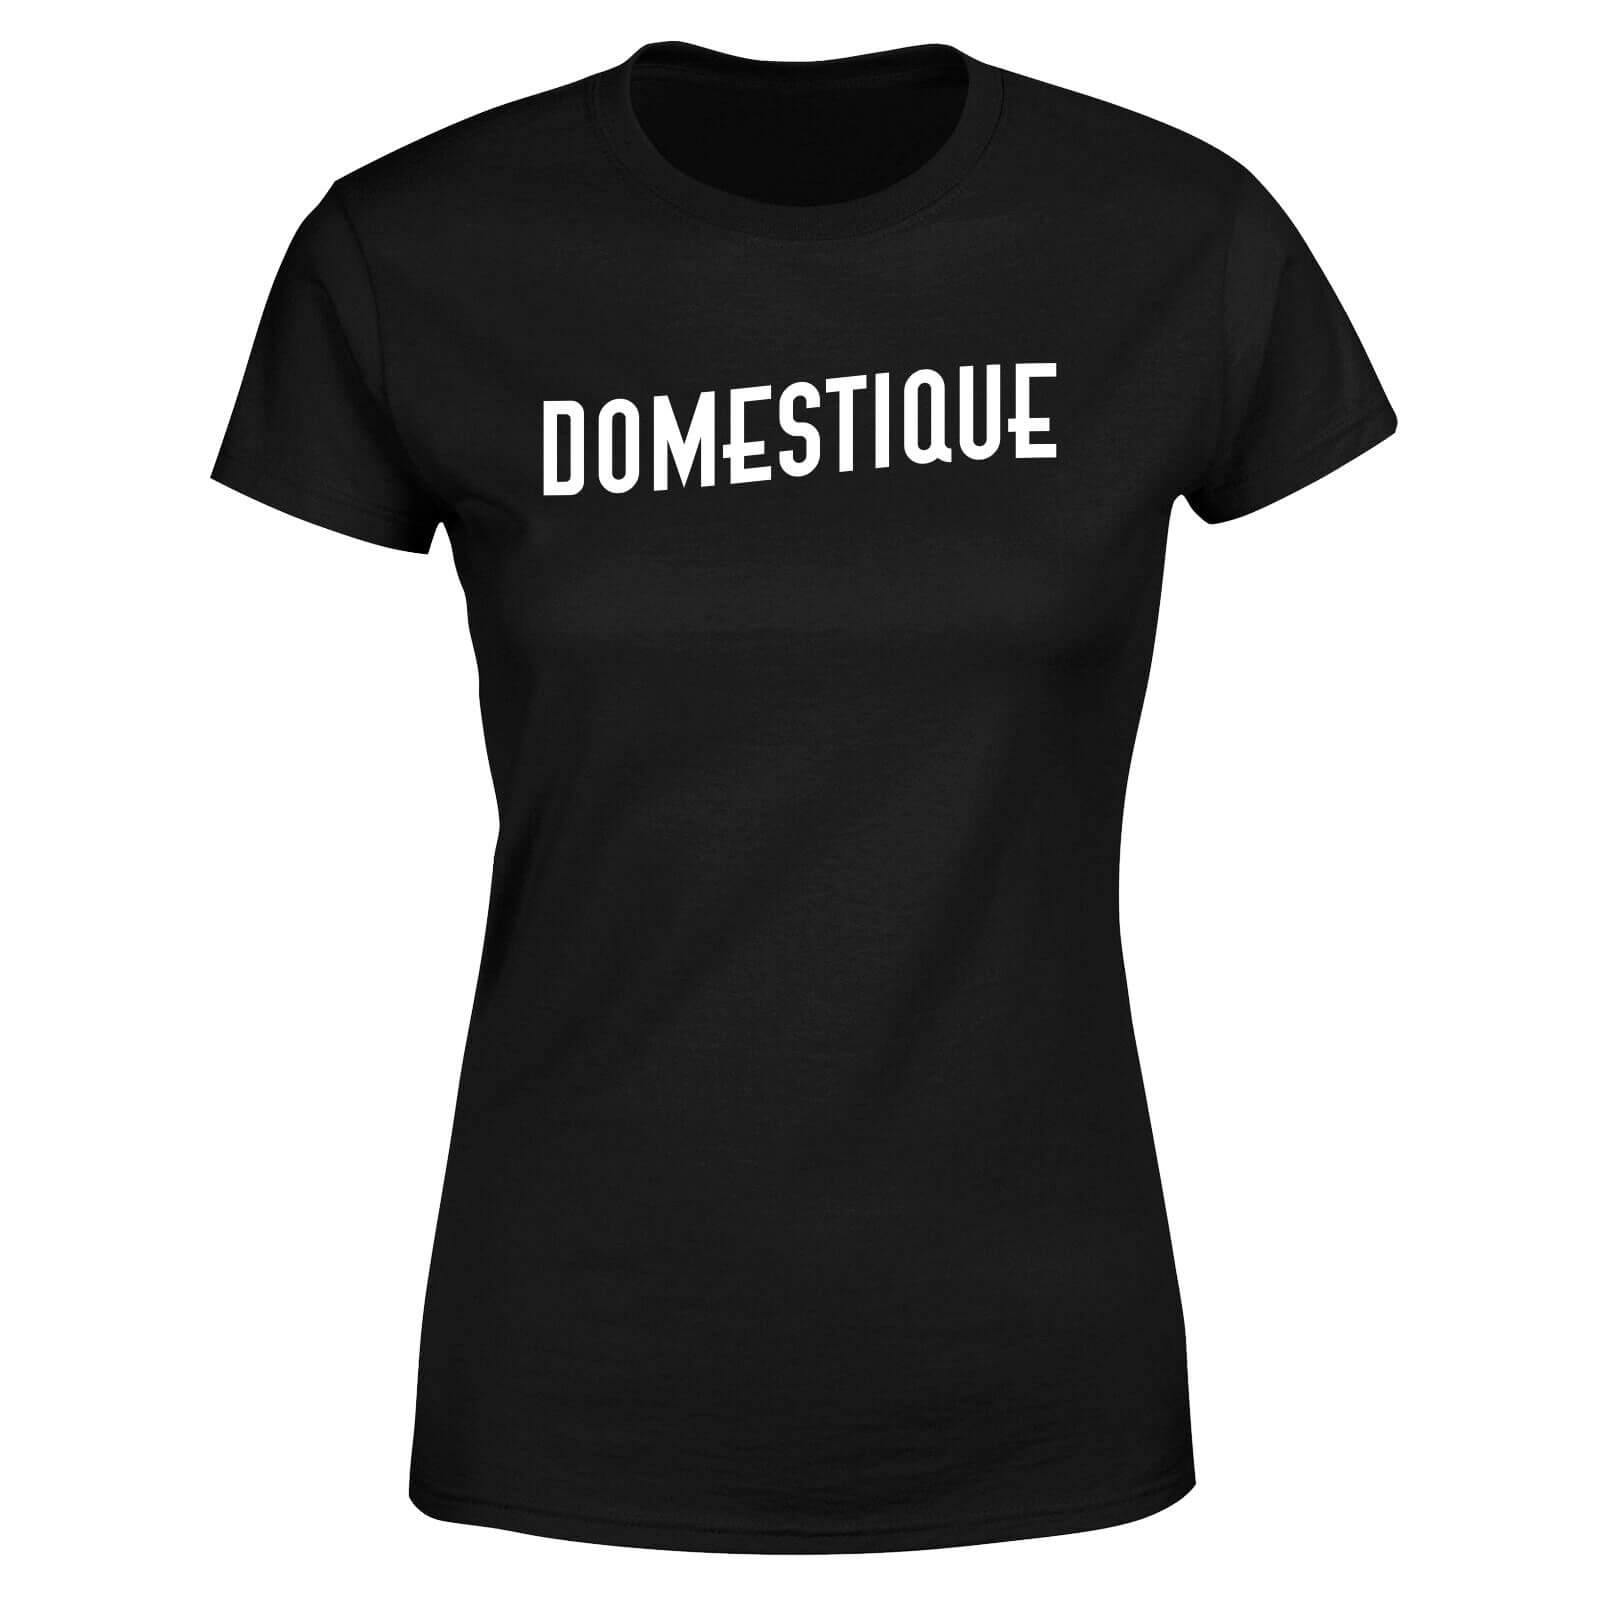 Domestique Women's T-Shirt - Black - XL - Schwarz